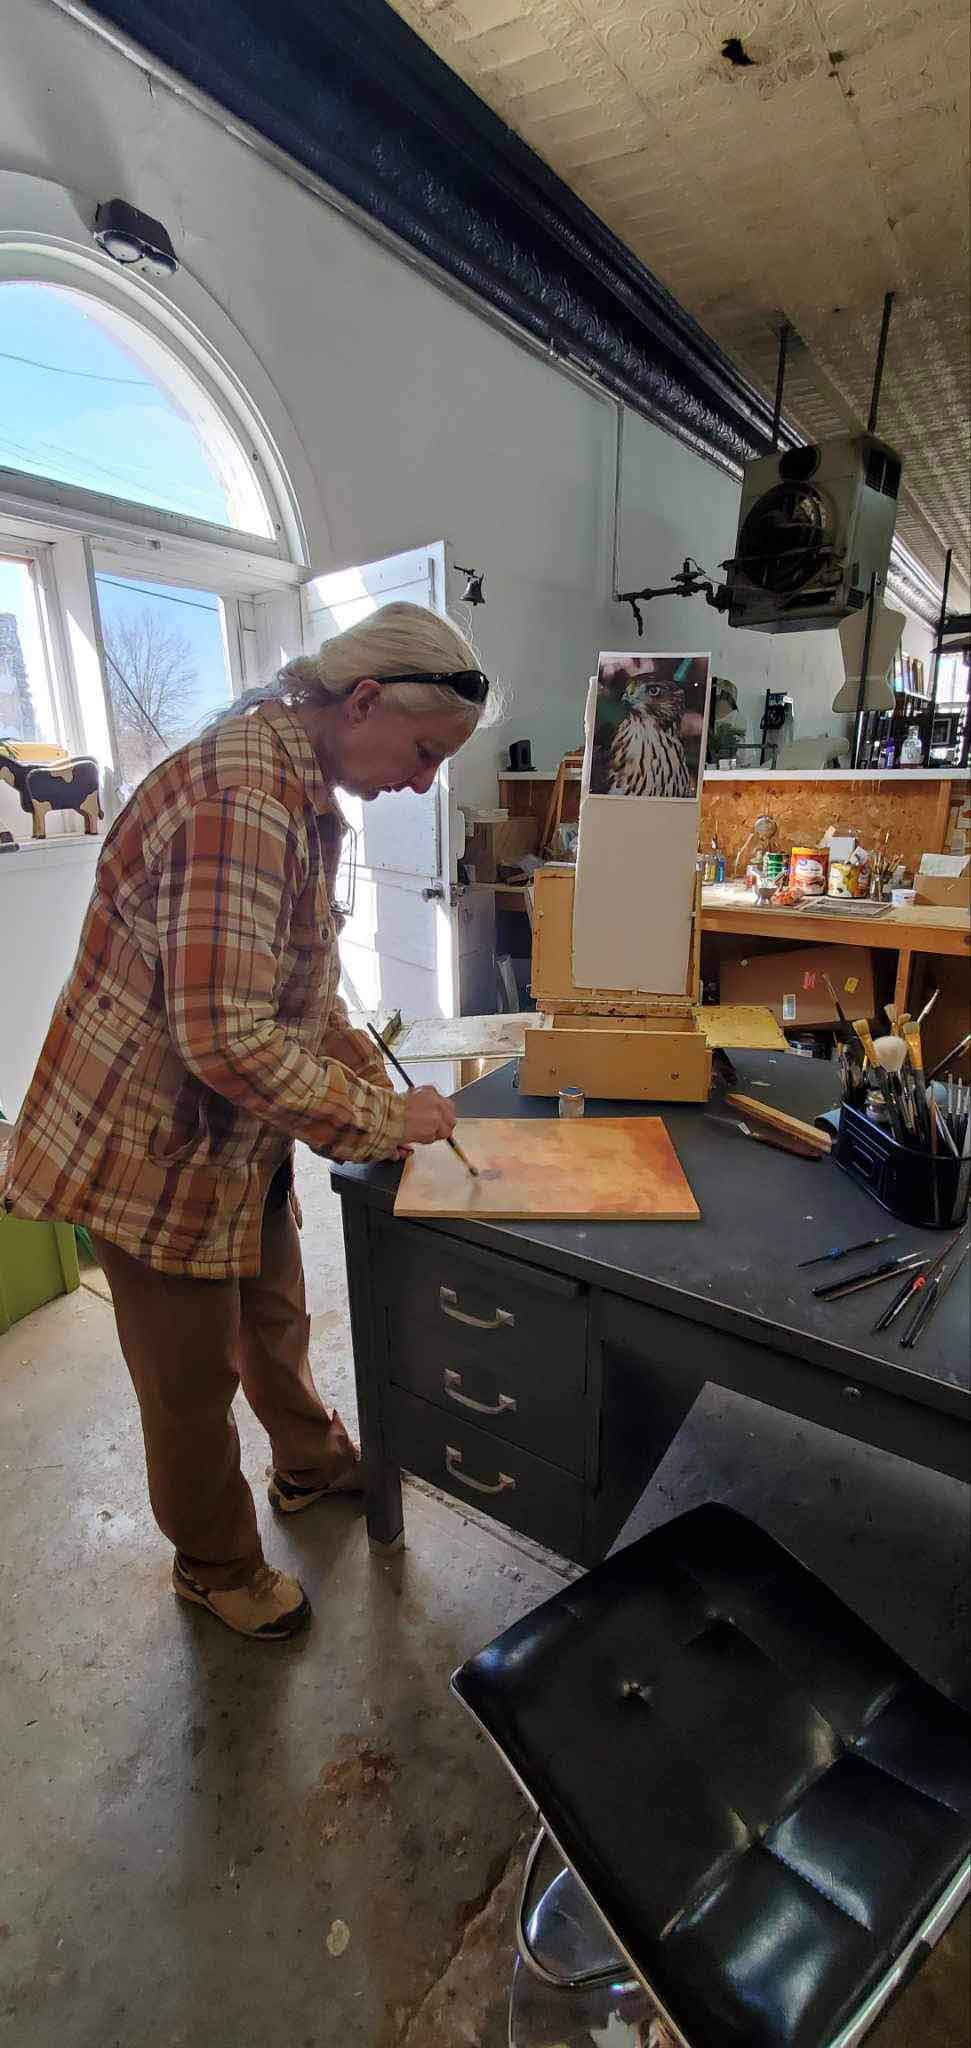 The artist owner painting in the Wild Ozark studio.